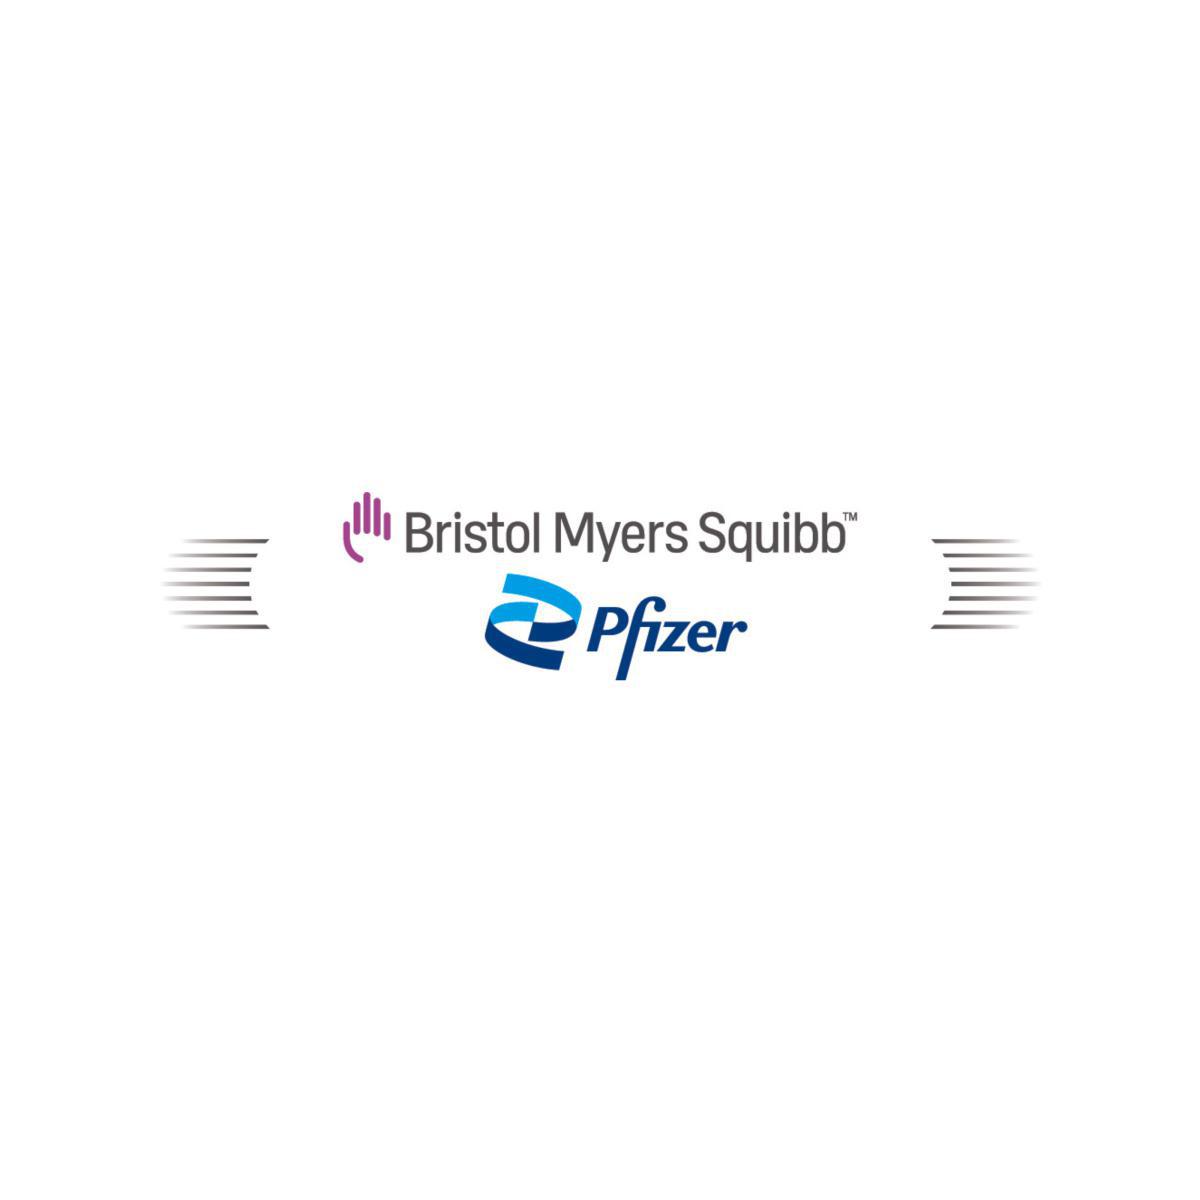 Pfizer Bristol Myers Squibb